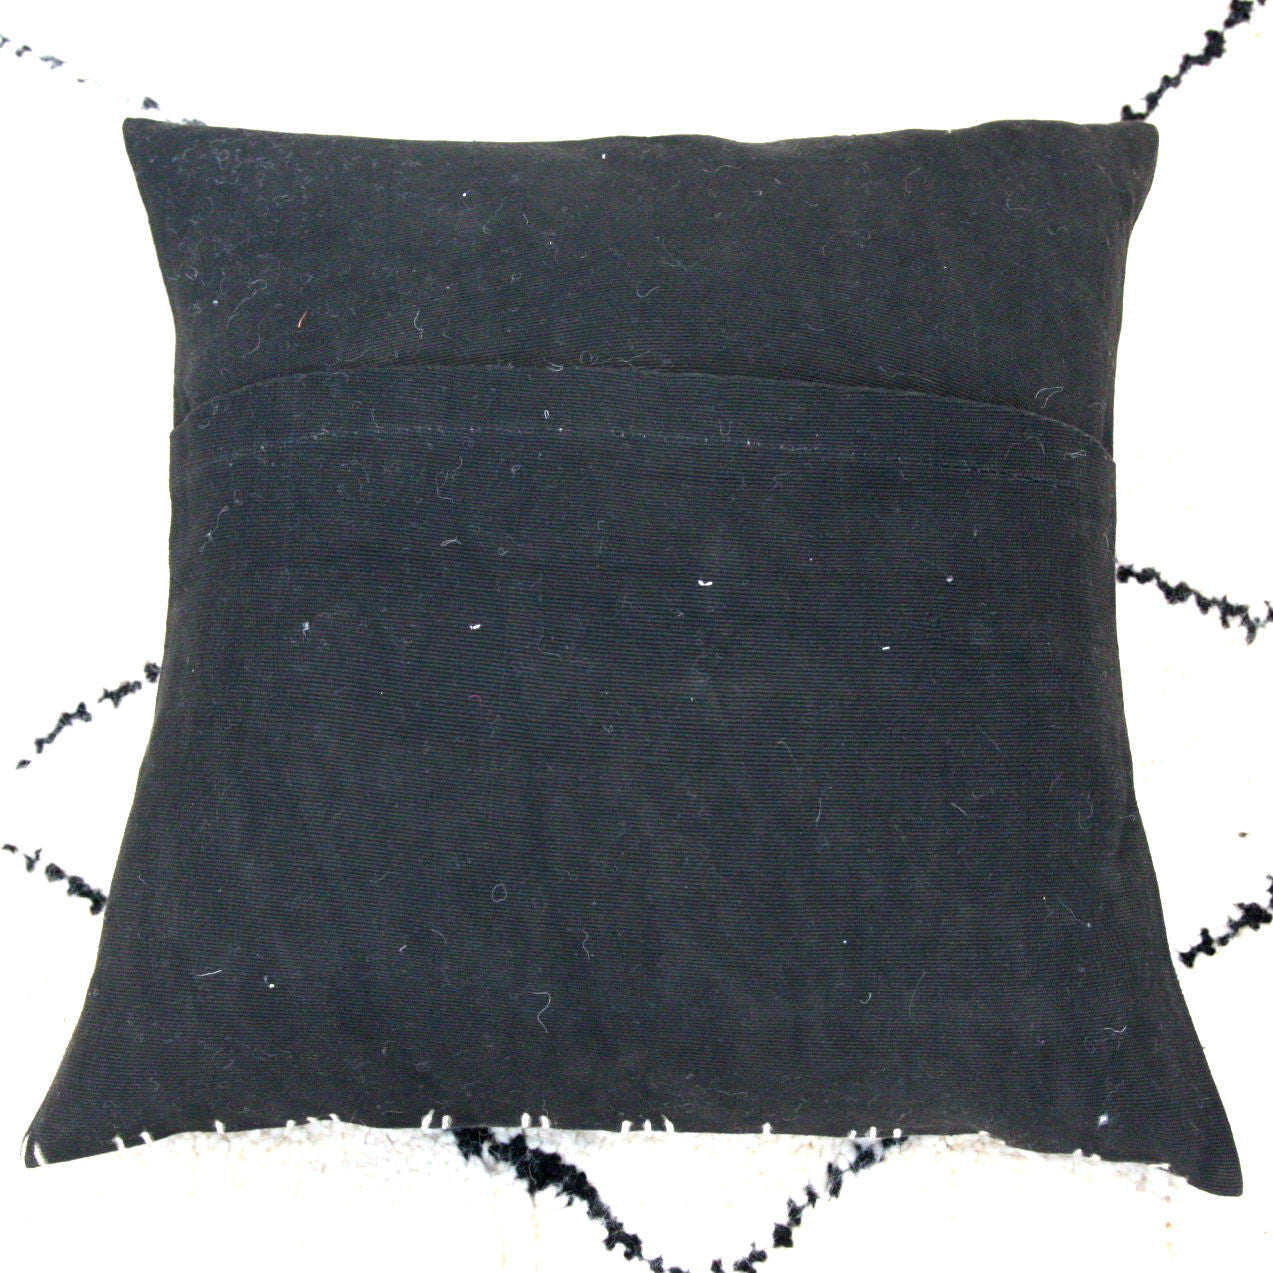 DOTS MUDCLOTH pillow cover BLACK 18"